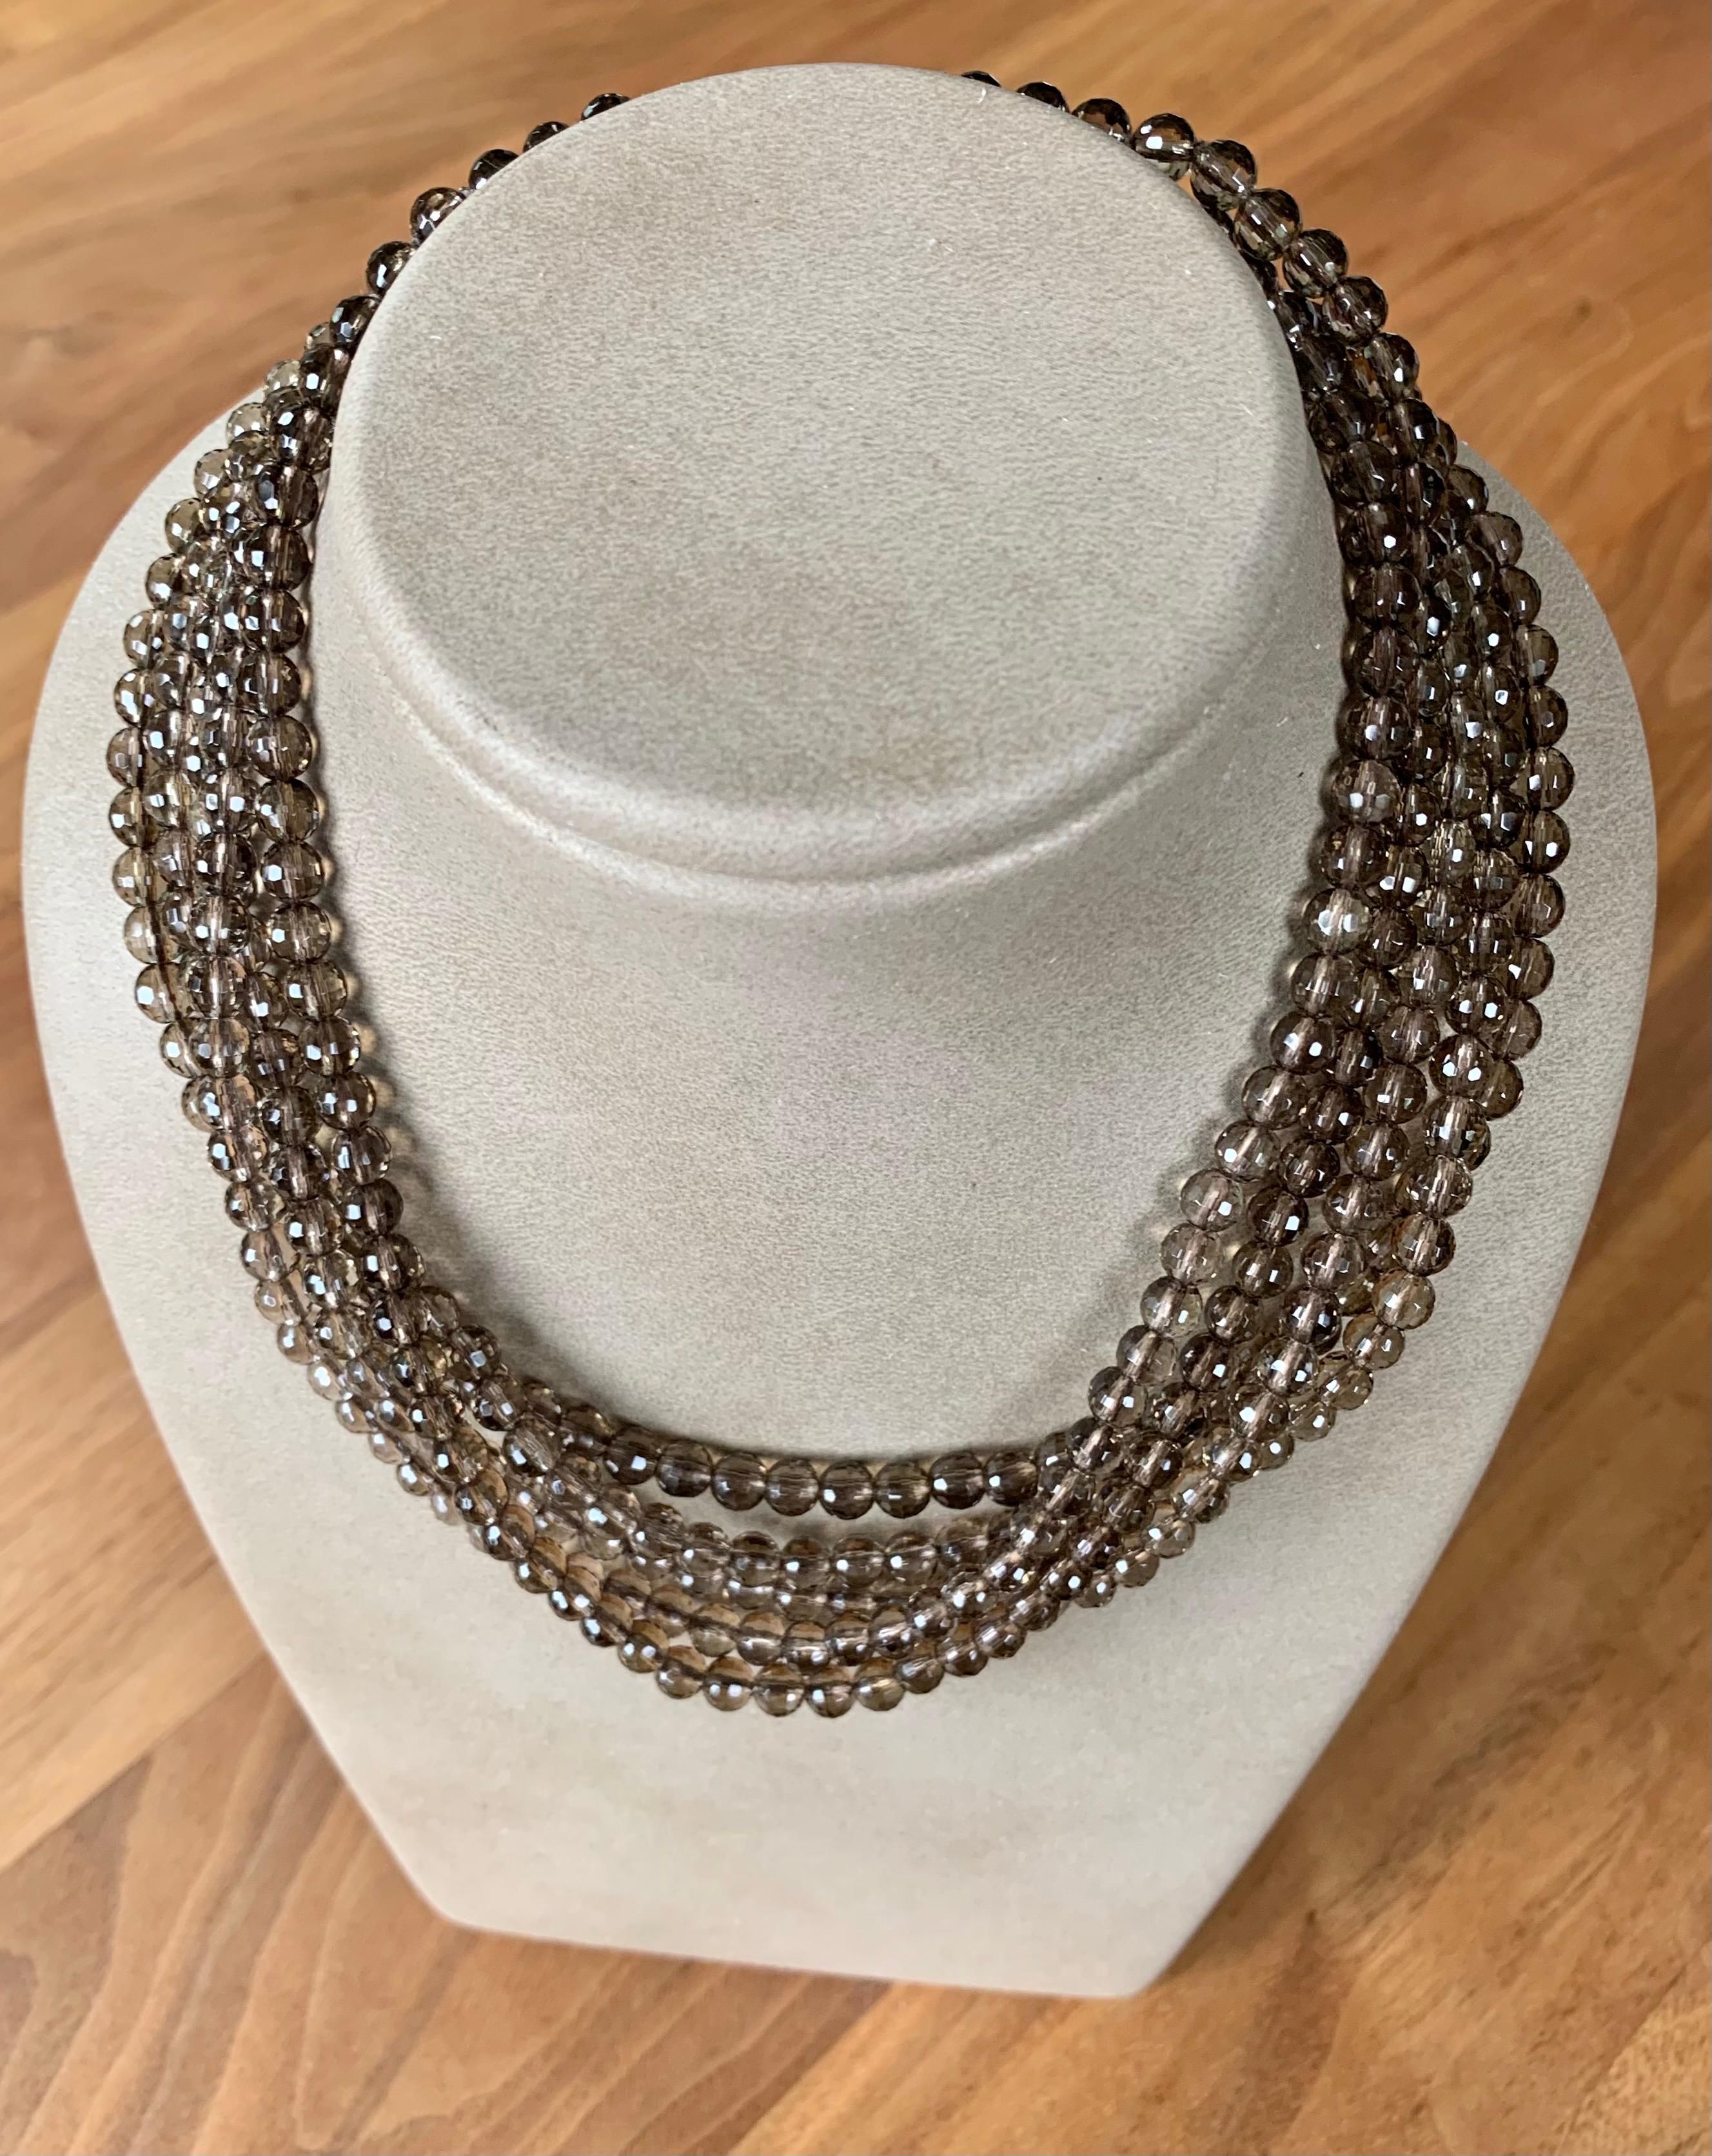 Extravagant 18 K Gold Necklace with Pendant Smoky Quartz Hematite and Diamonds For Sale 6